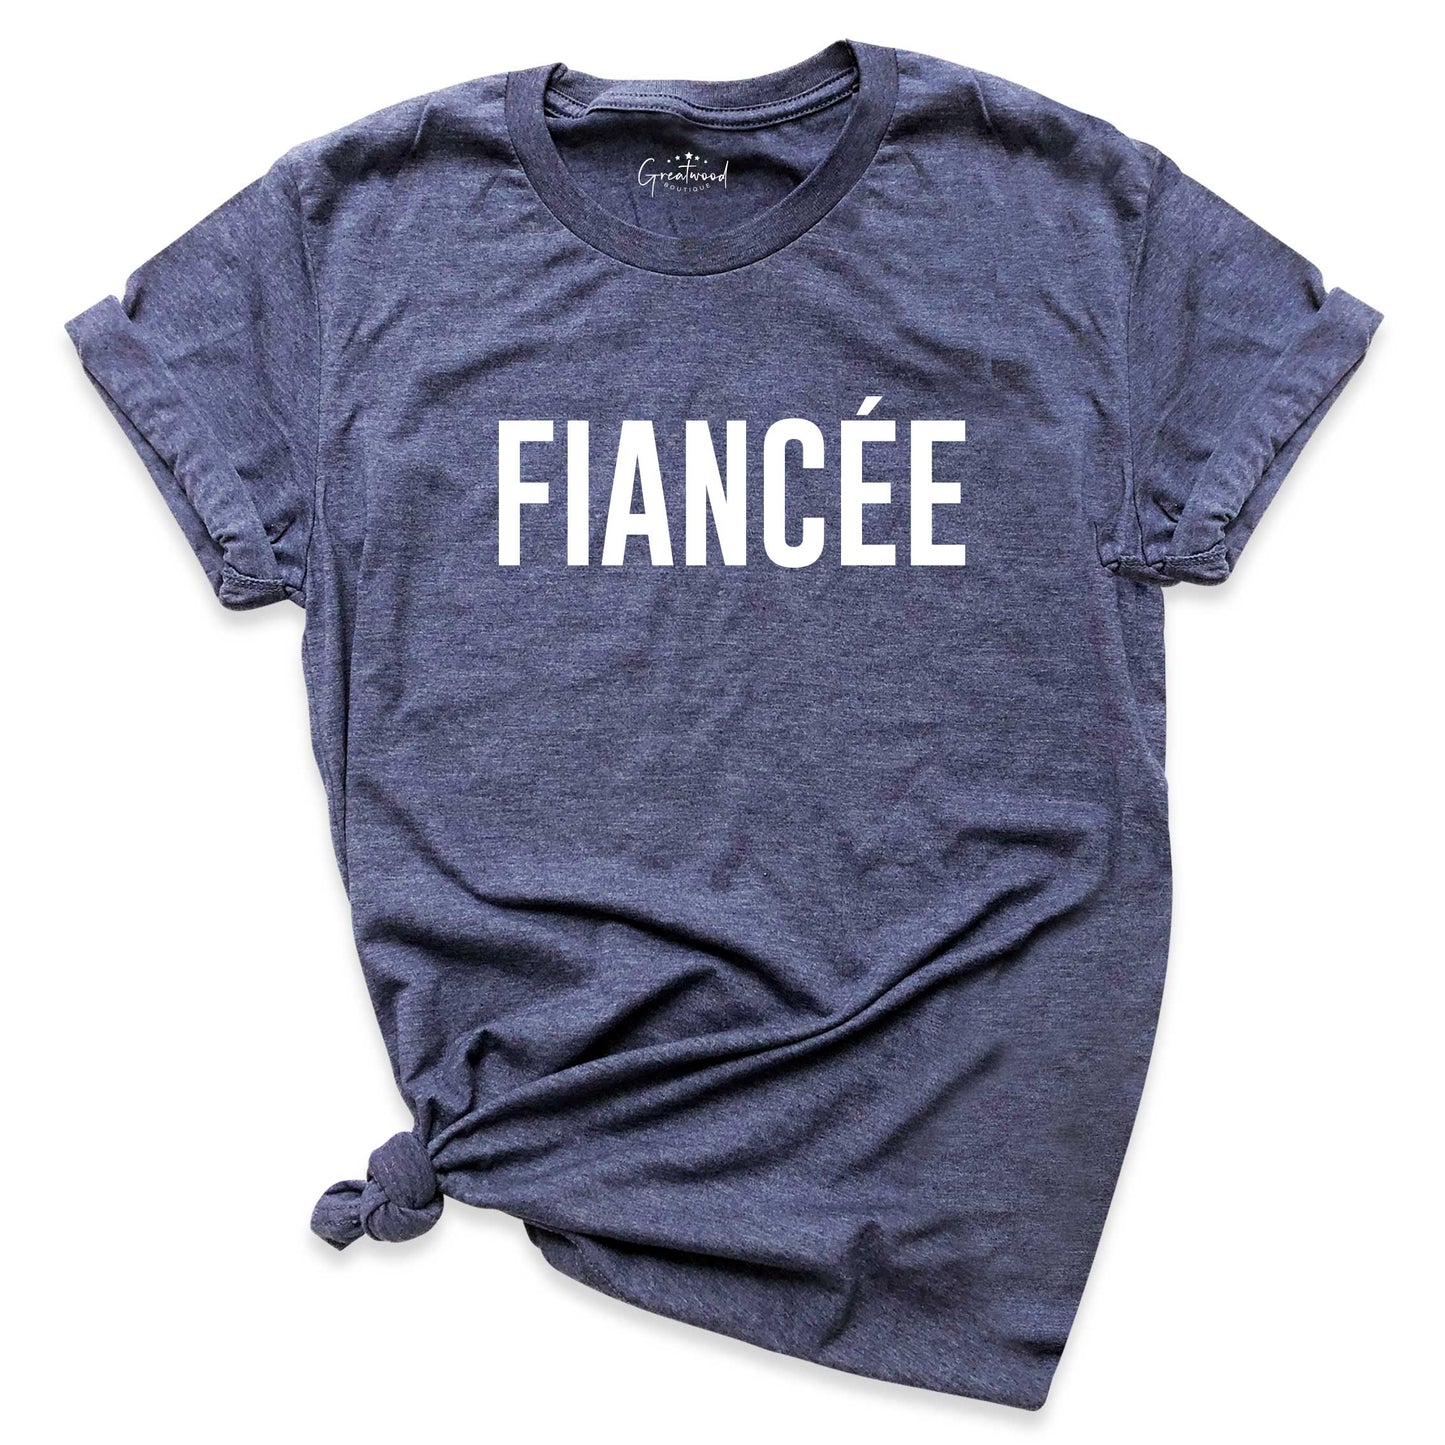 Fiancee Shirt